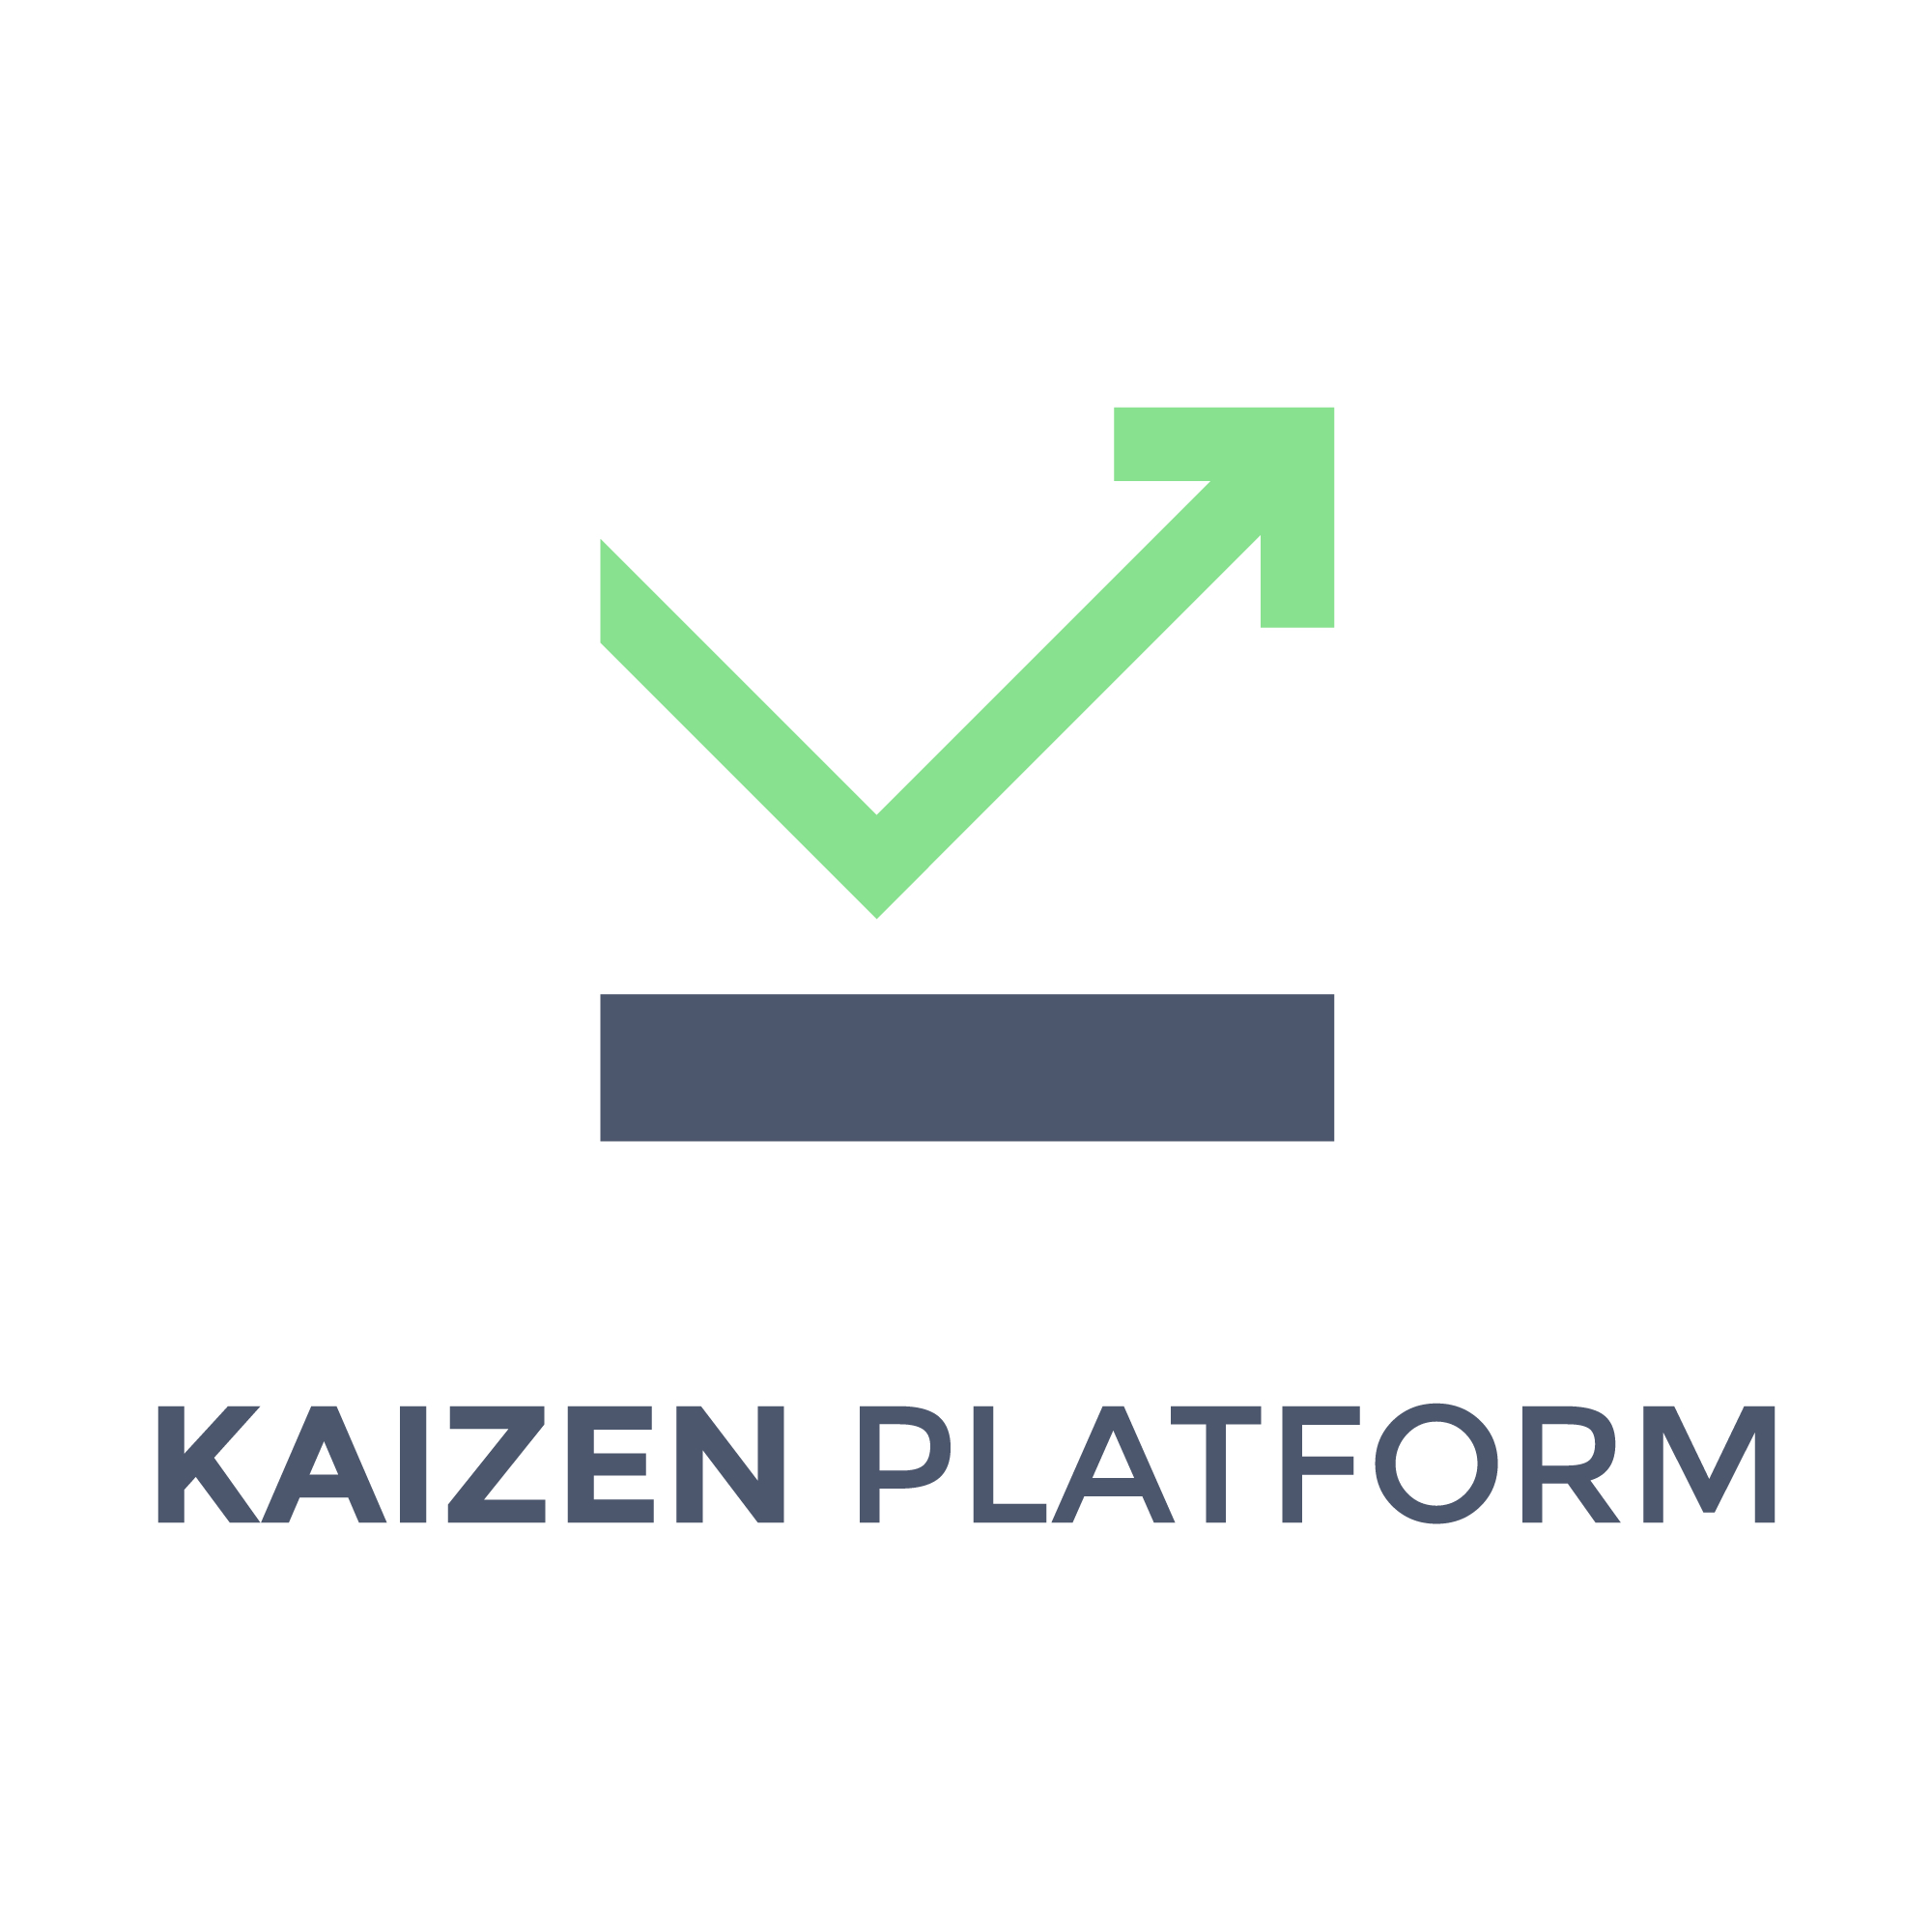 Planbcd Kaizen Platform へ サービス名変更のお知らせ 株式会社kaizen Platformのプレスリリース